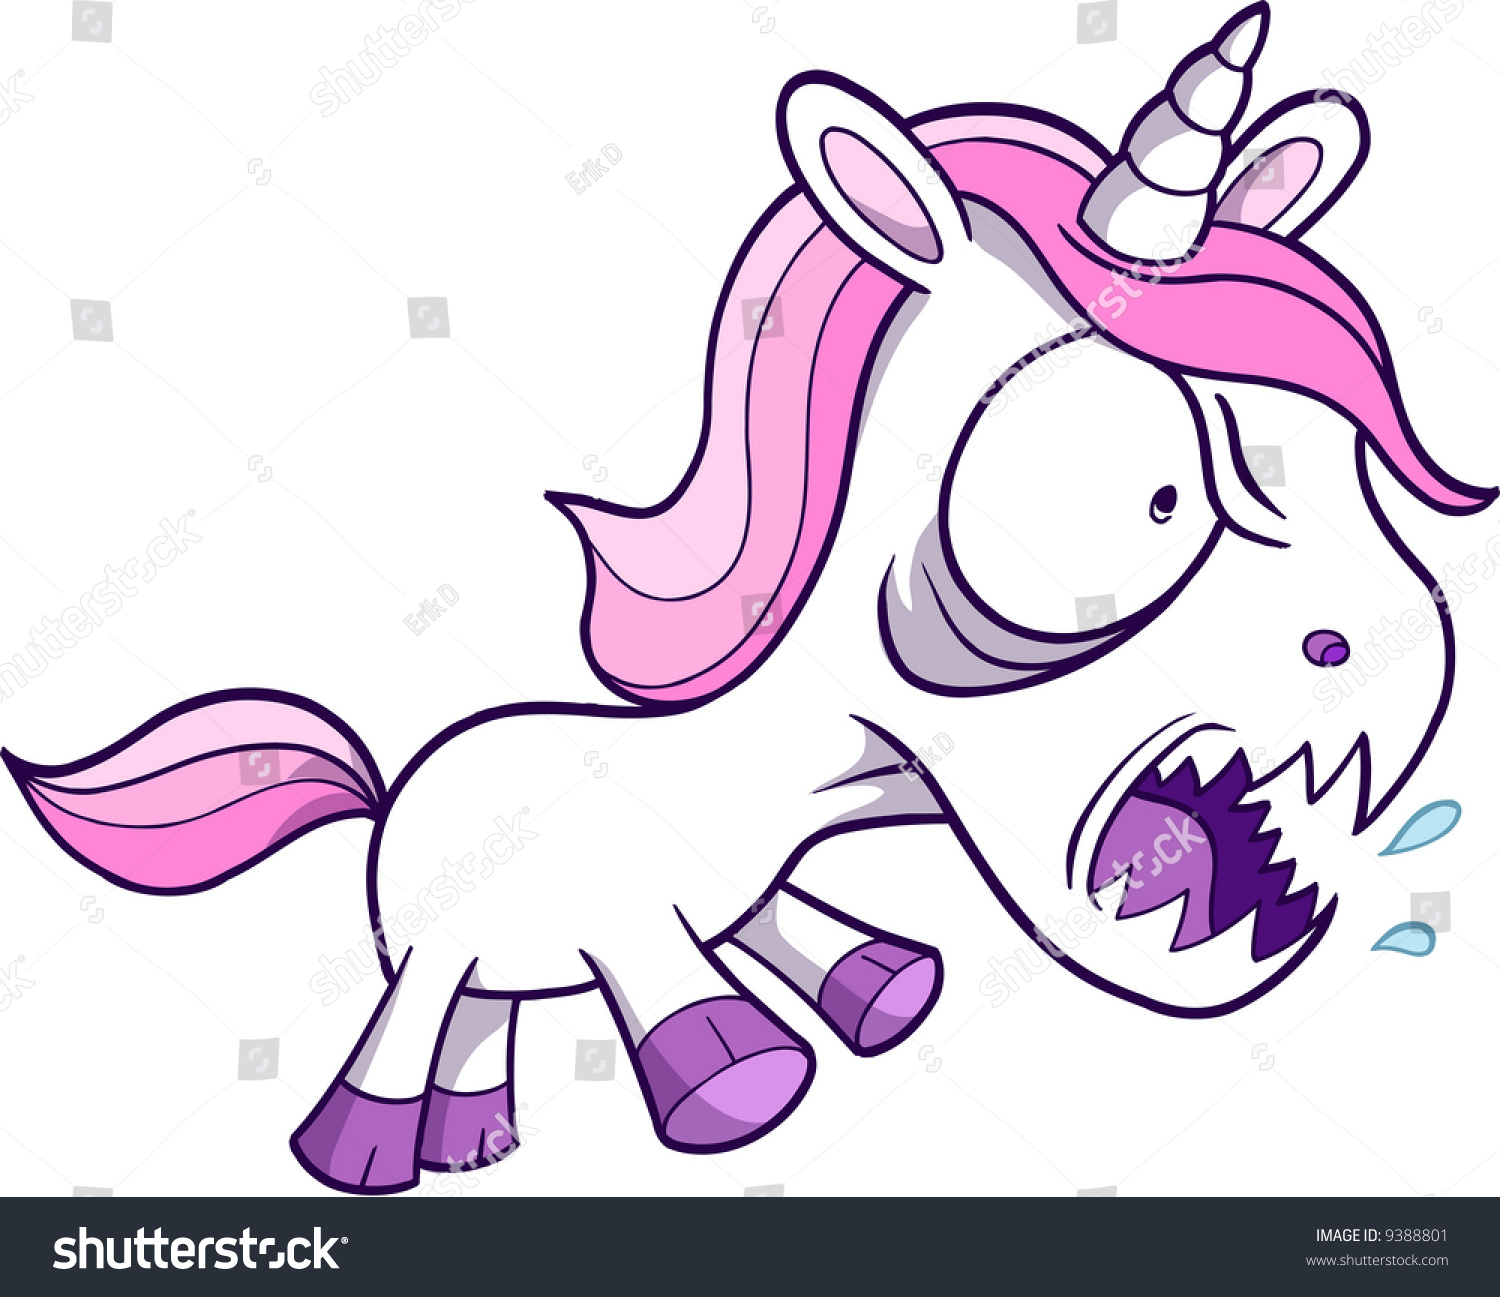 SVG of Crazy Unicorn Vector Illustration svg